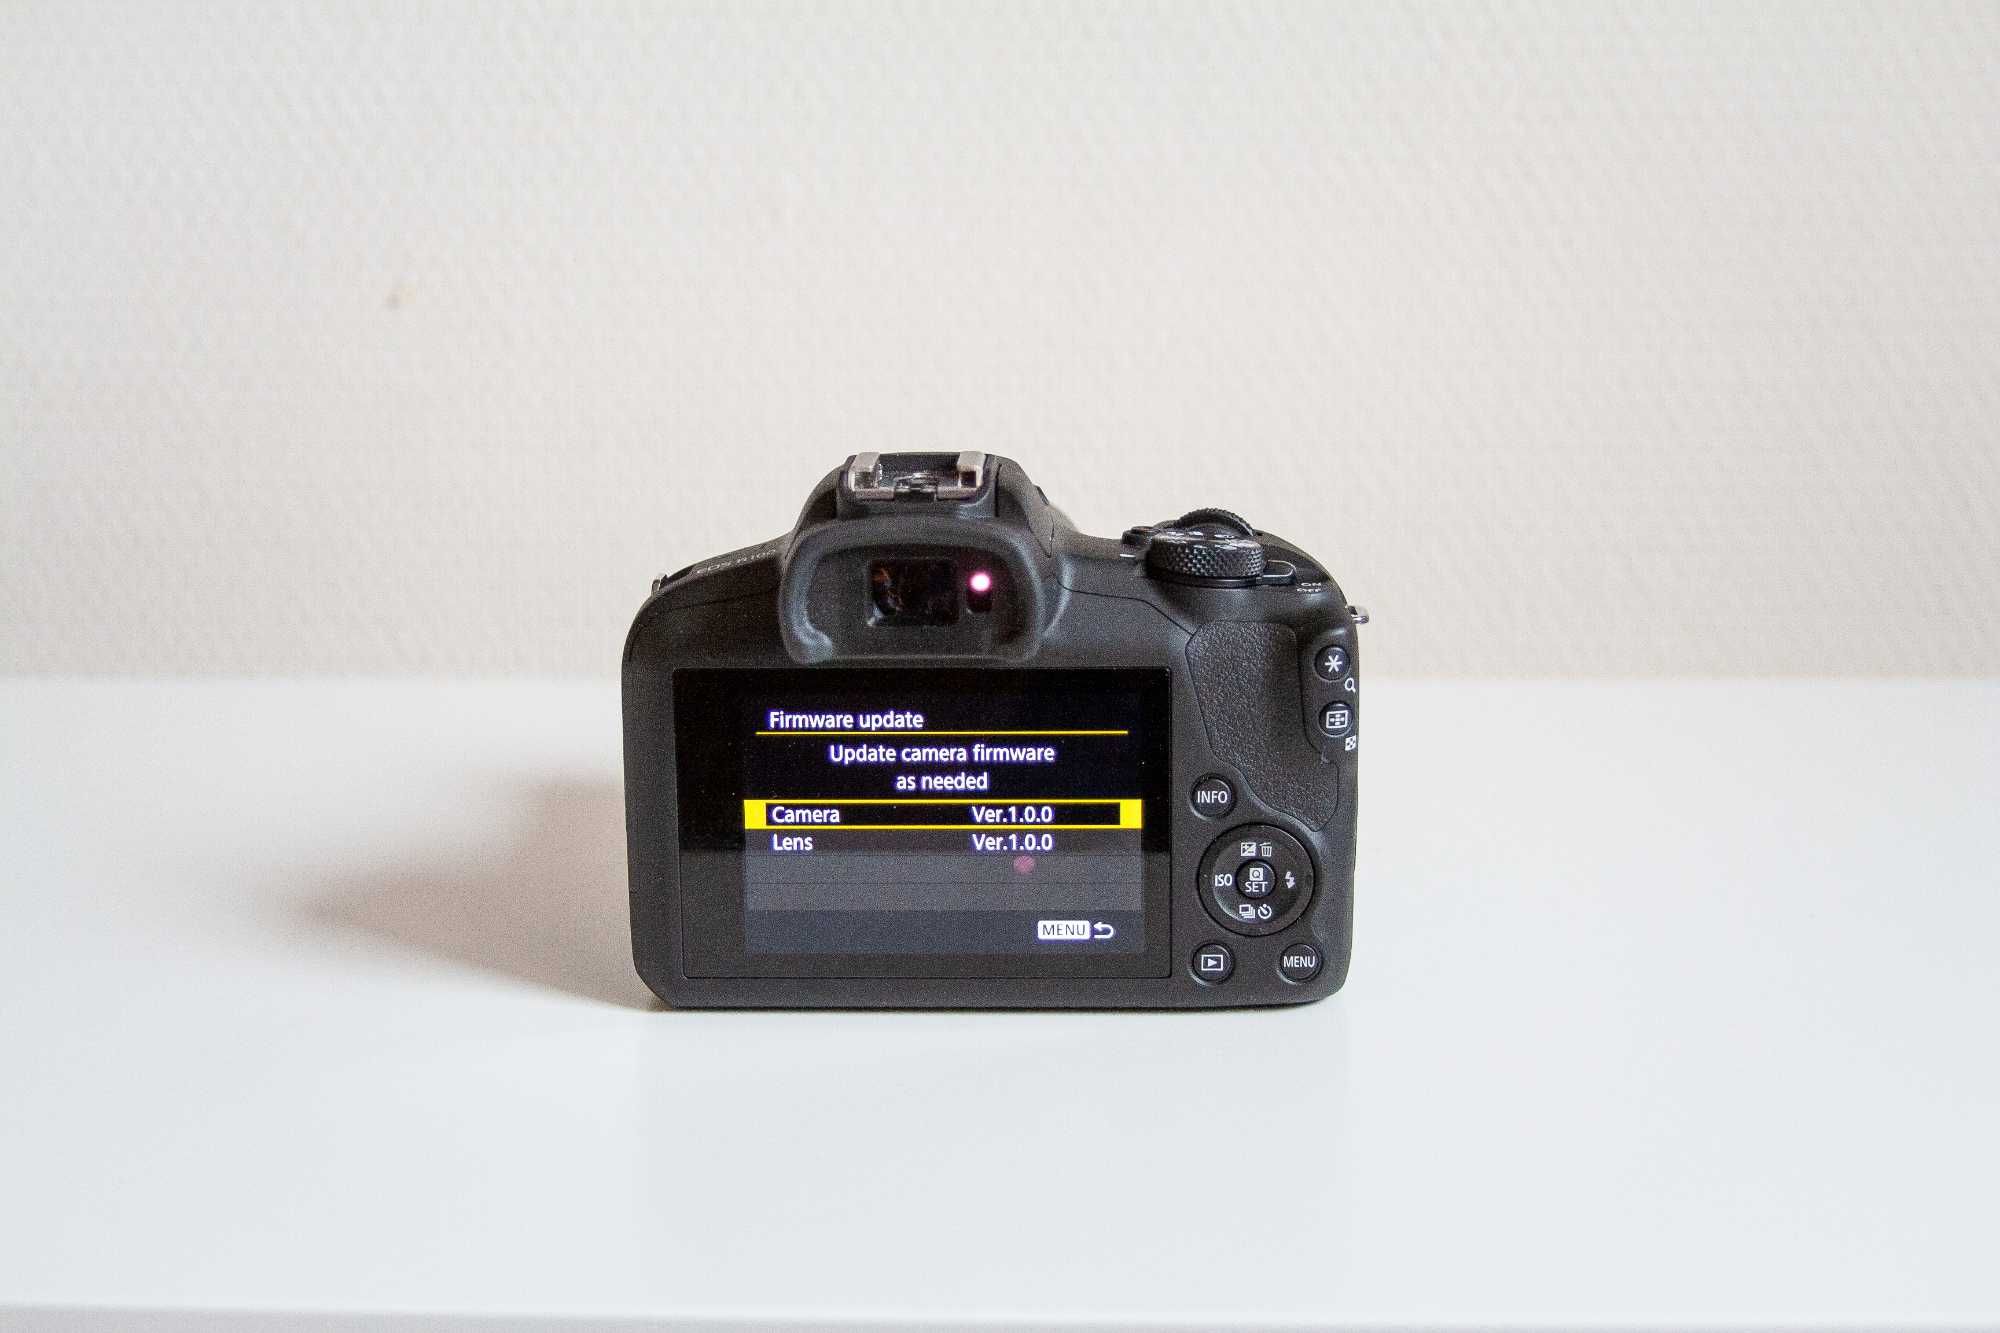 Jak NOWY Canon R100 kit + RF-S 18-45mm + EF-EOS R adapter